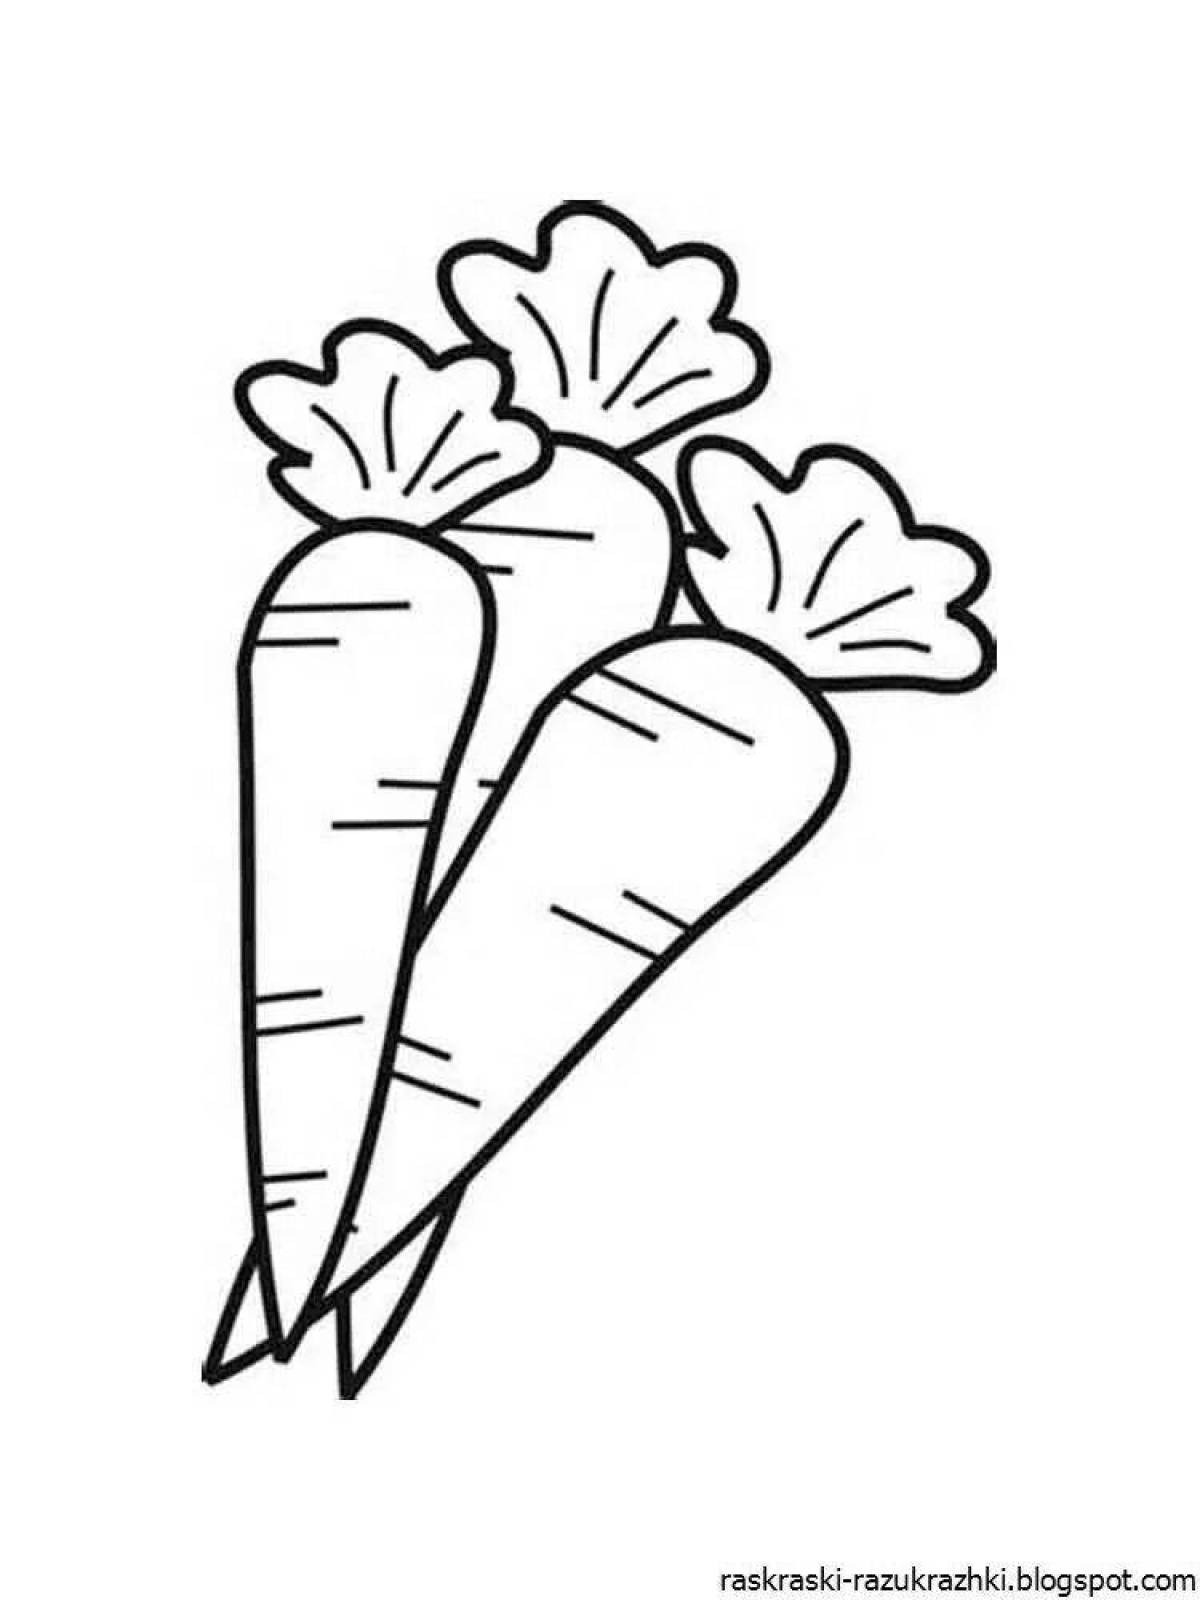 Красочная морковная раскраска для детей 3-4 лет